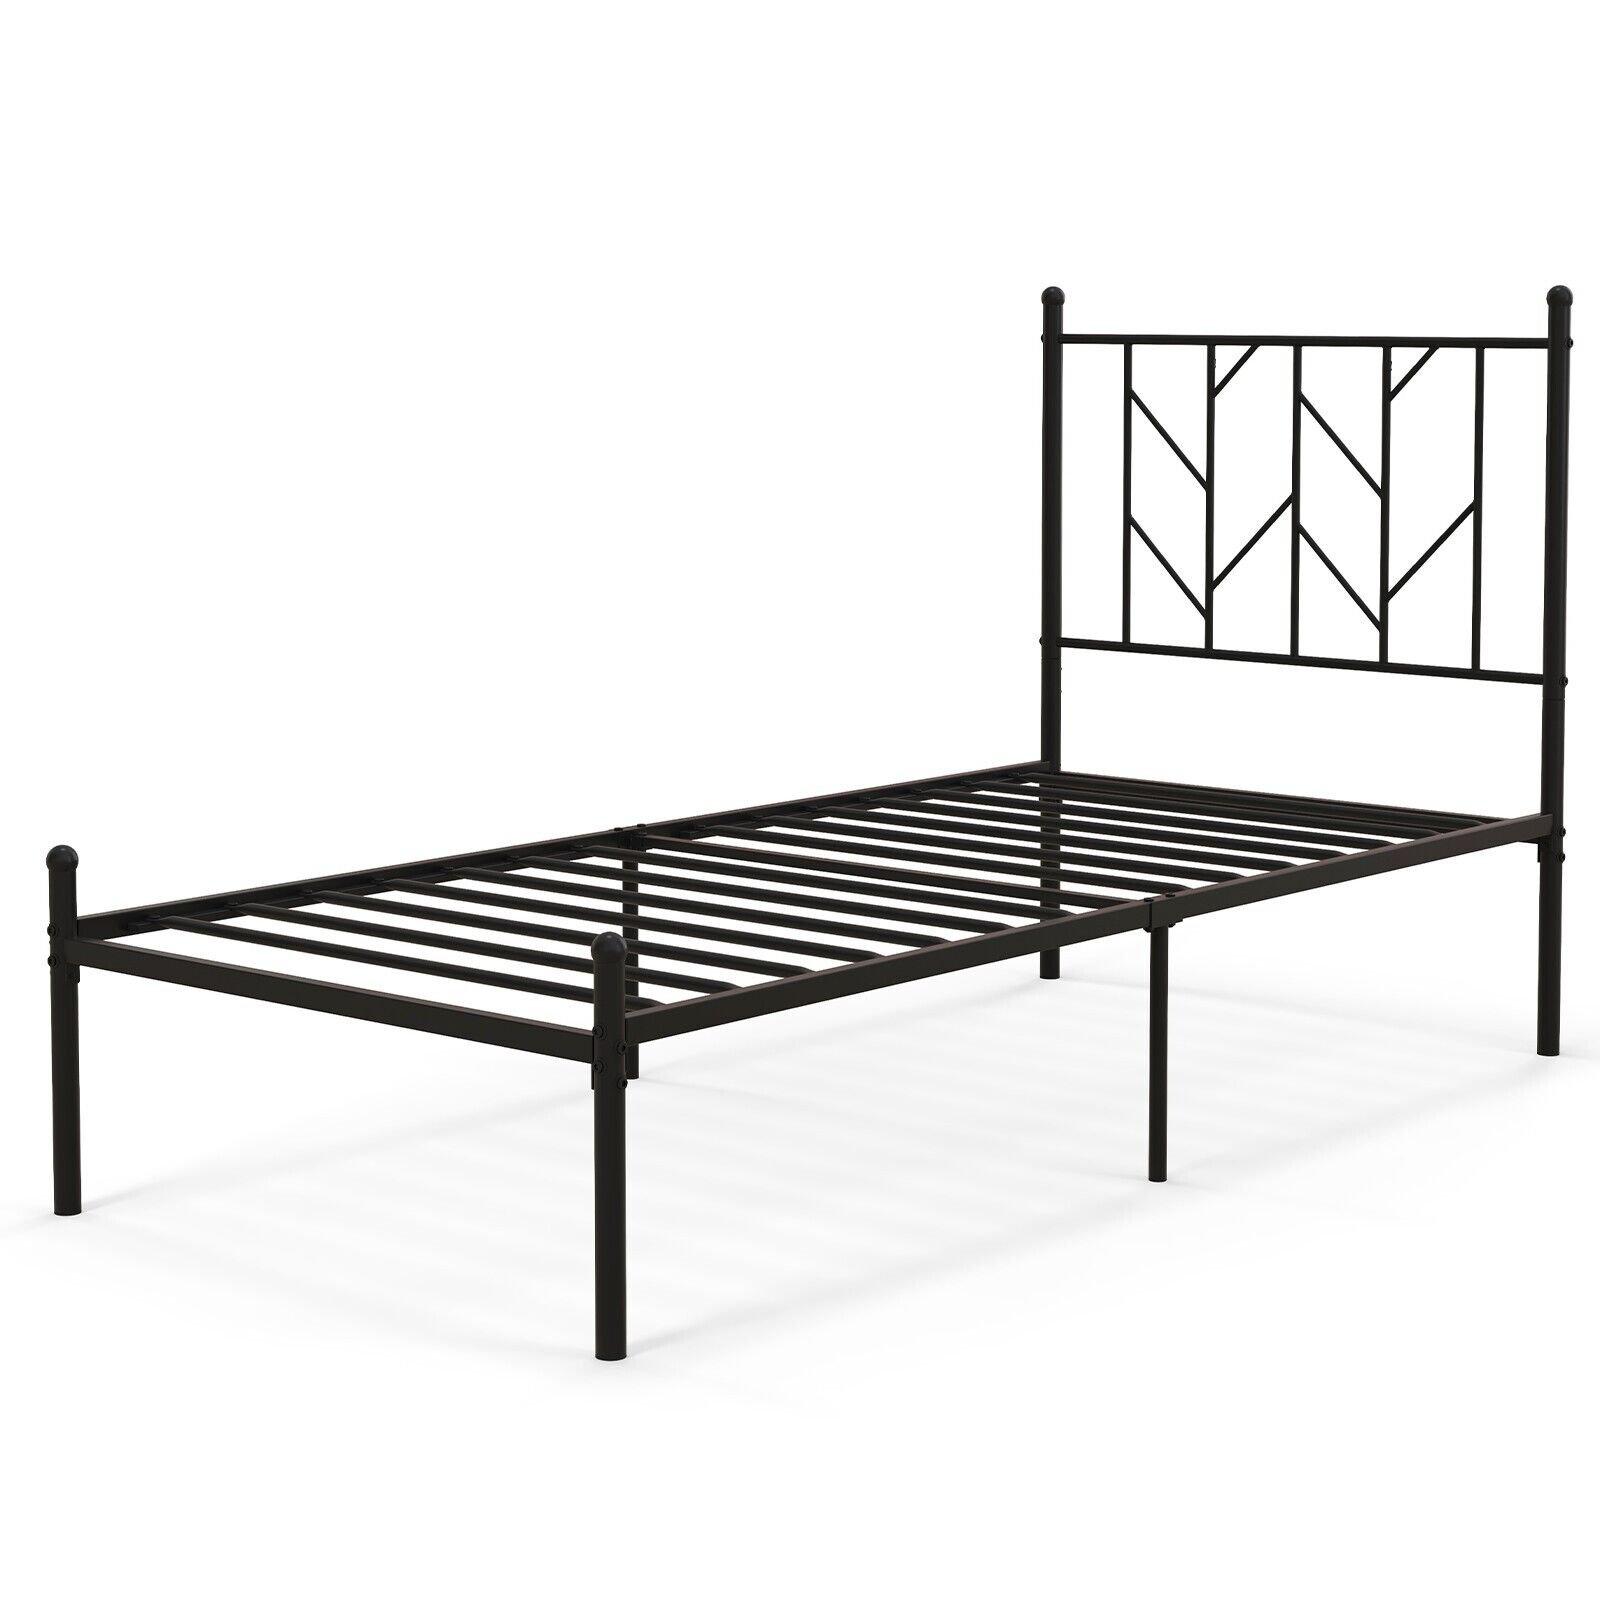 3FT Single Metal Bed Frame Heavy-duty Slatted Platform Bed with Headboard